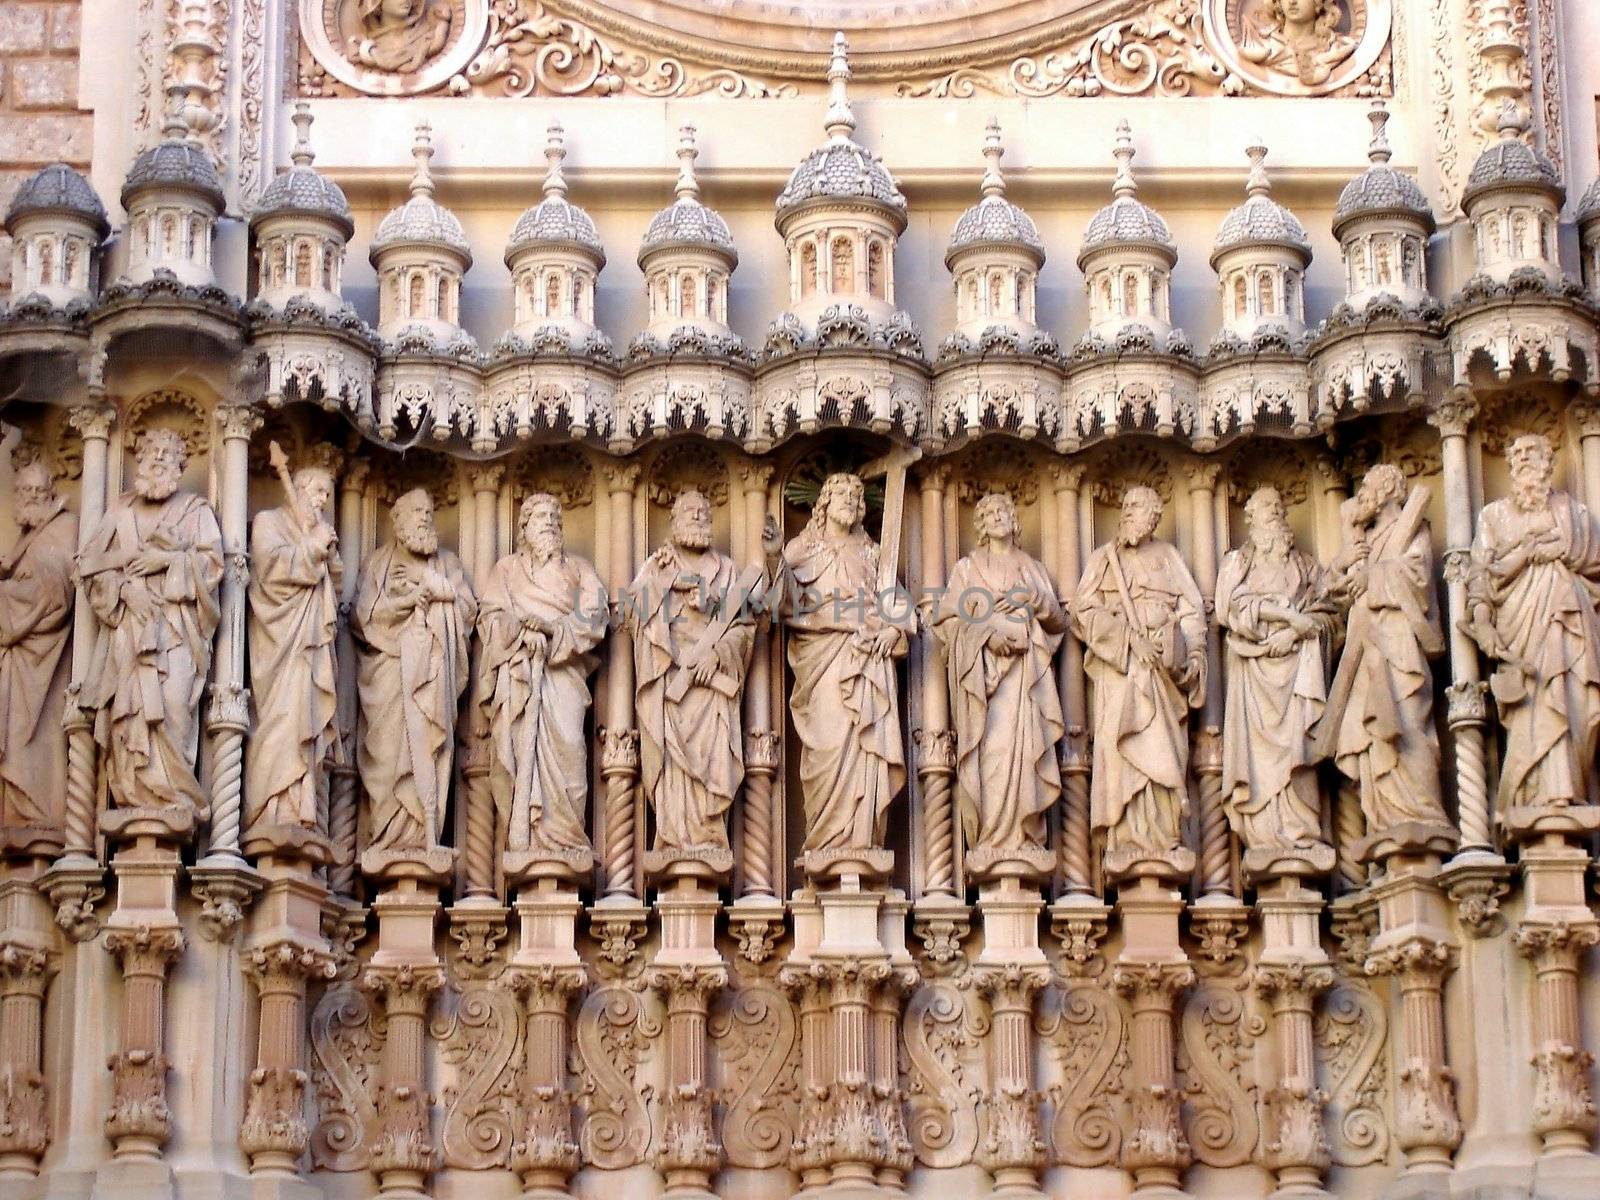 View of sculpture of the apostles outside de Sagrada Familia